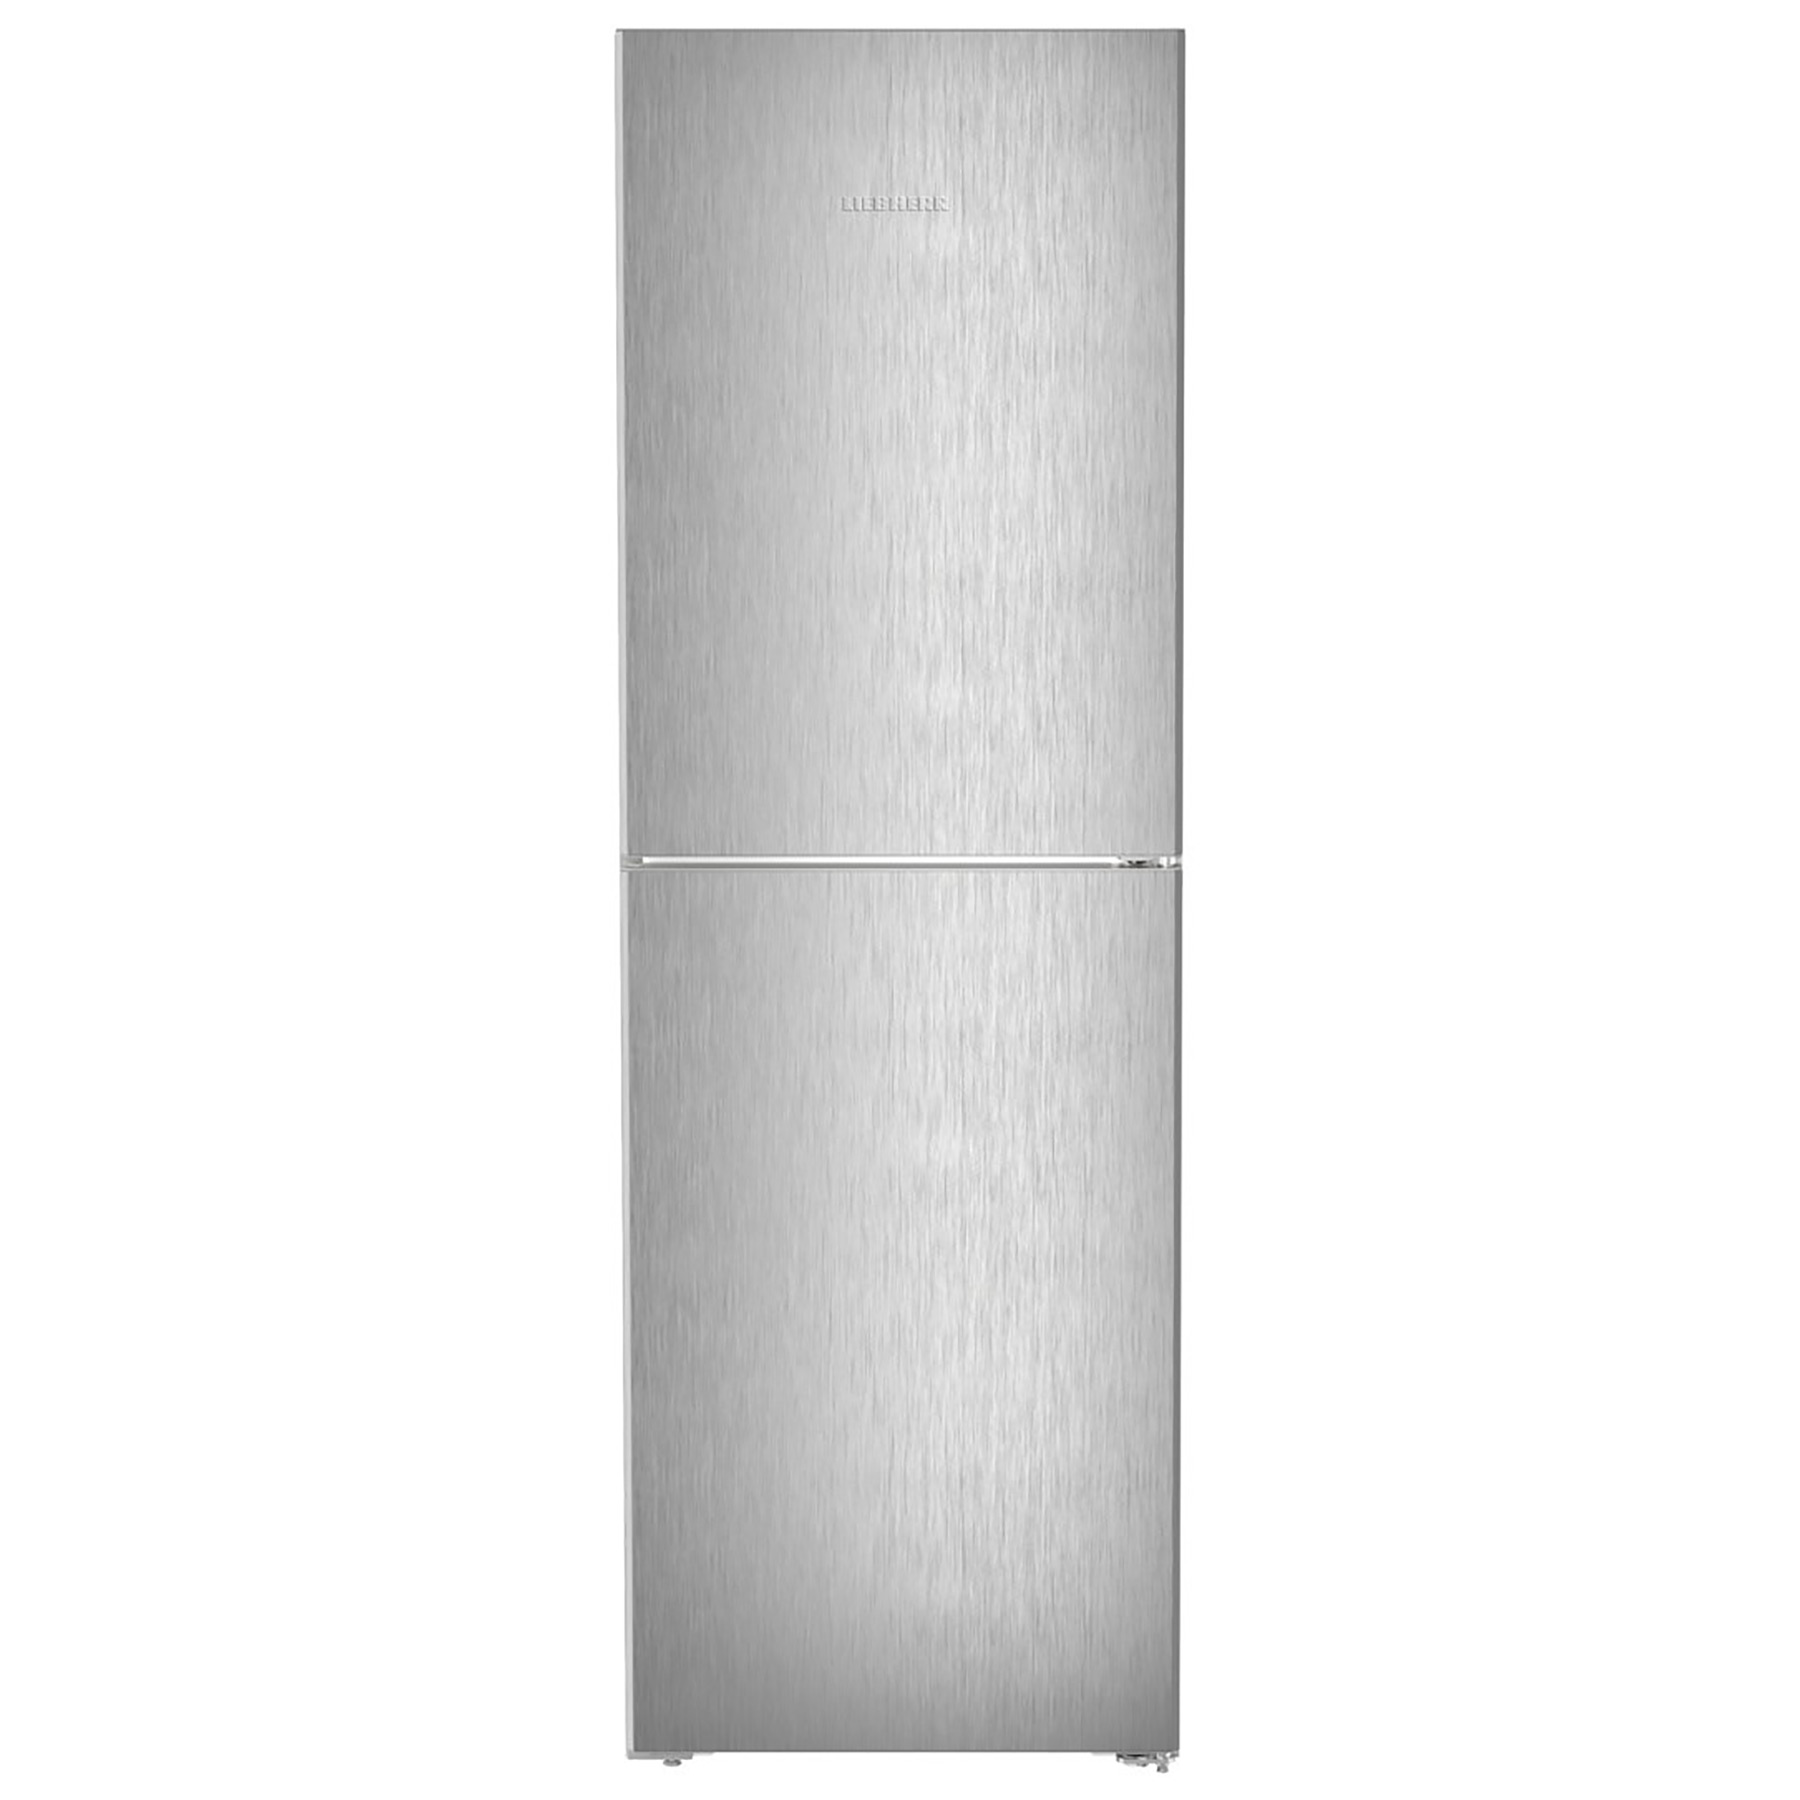 Liebherr CNSFD5204 60cm NoFrost Fridge Freezer in Silver 1 85m D Rated